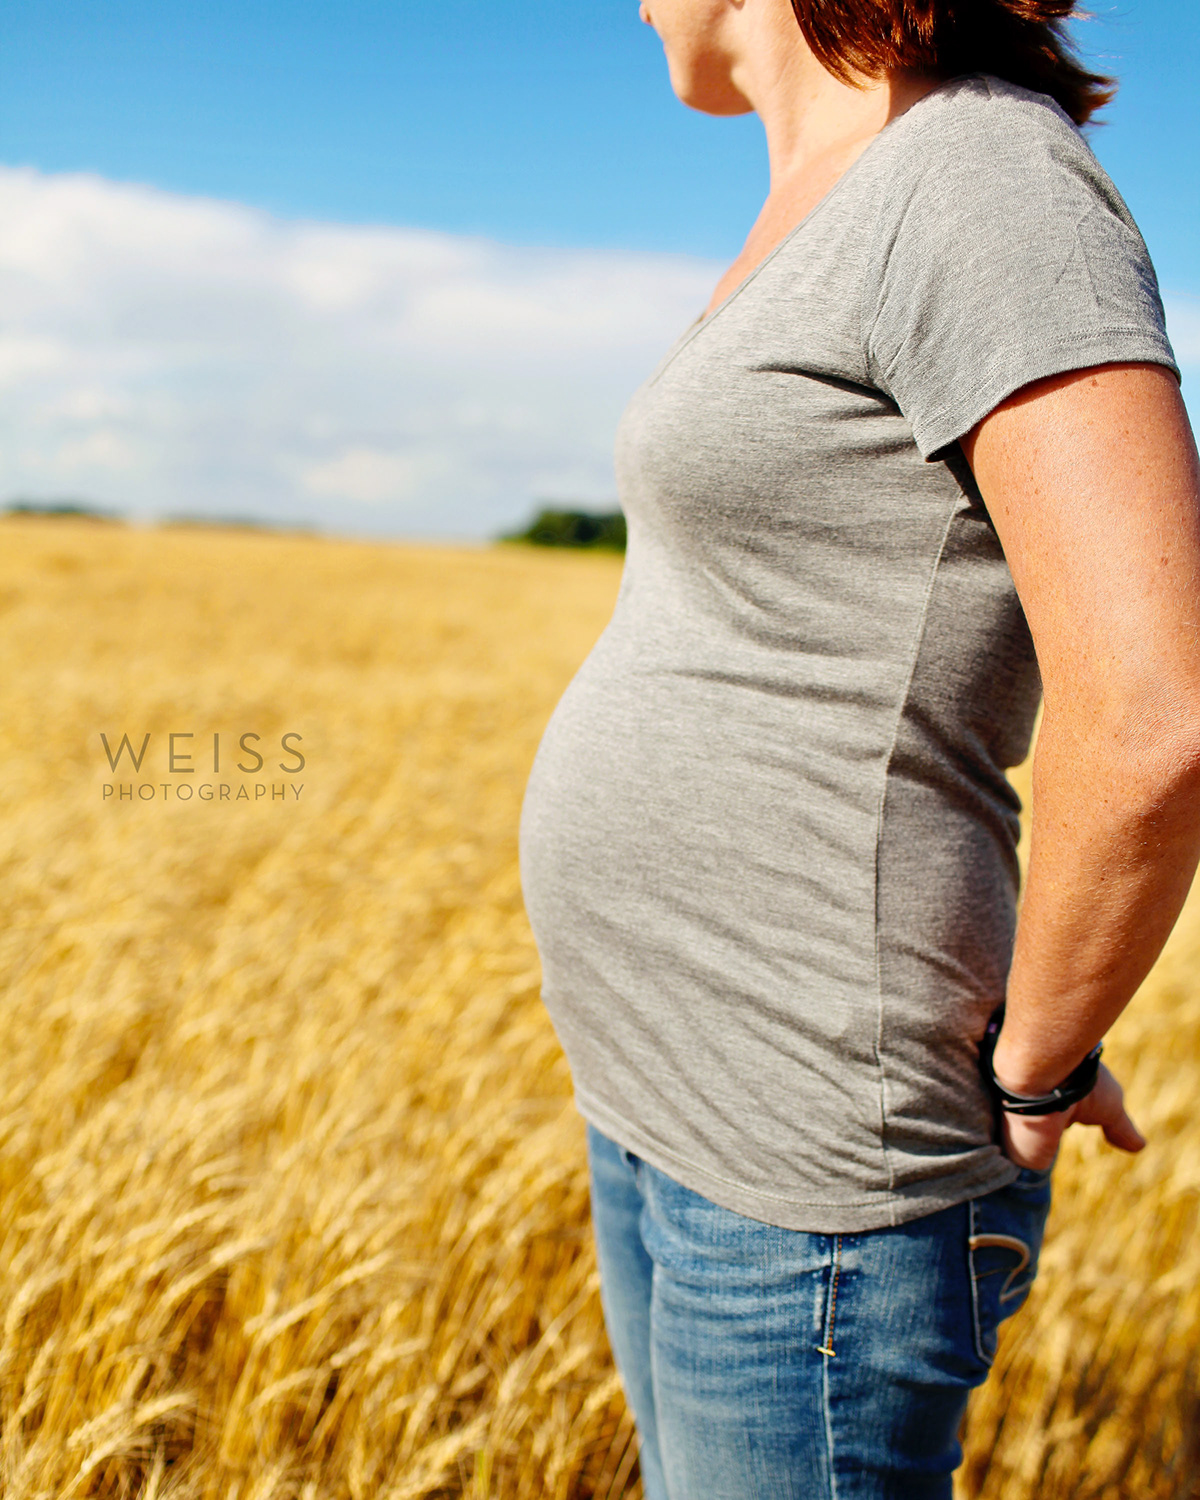 cara weiss Photograph cara weiss twin cities St Paul minneapolis minnesota photographer maternity maternity photoshoot outdoors wheat fields portrait